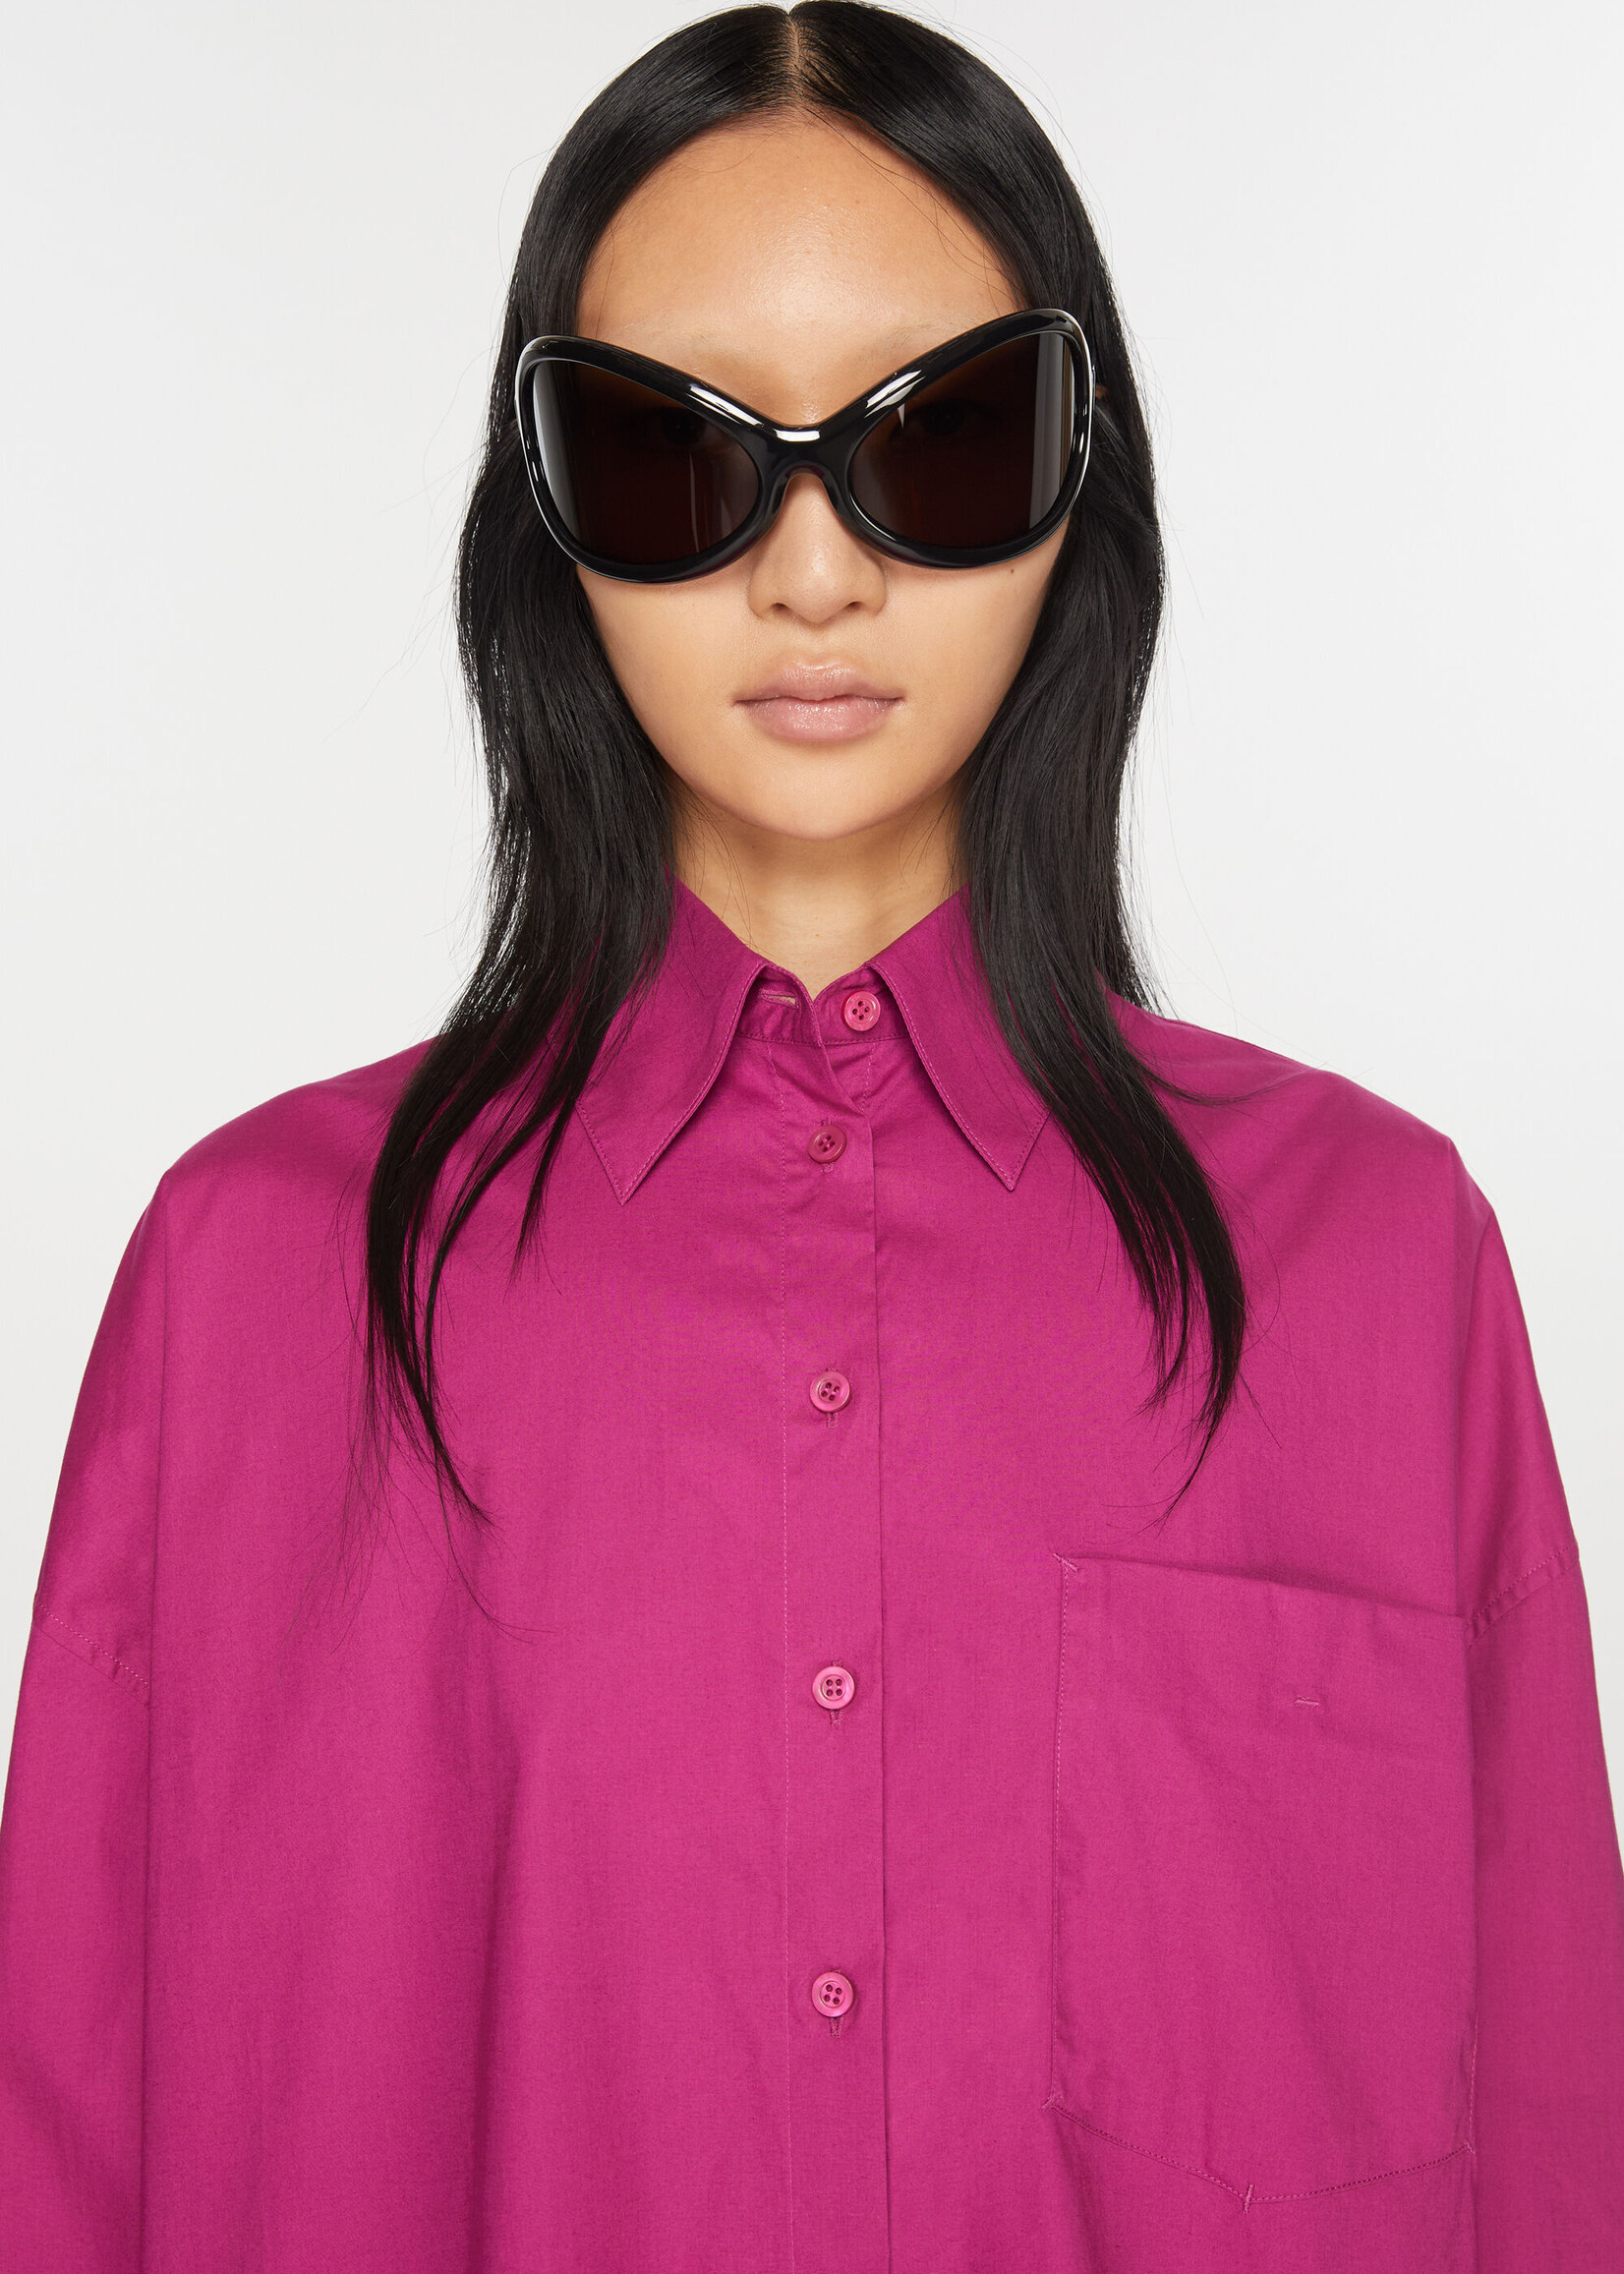 Acne Studios Shirt blouse - Magenta pink